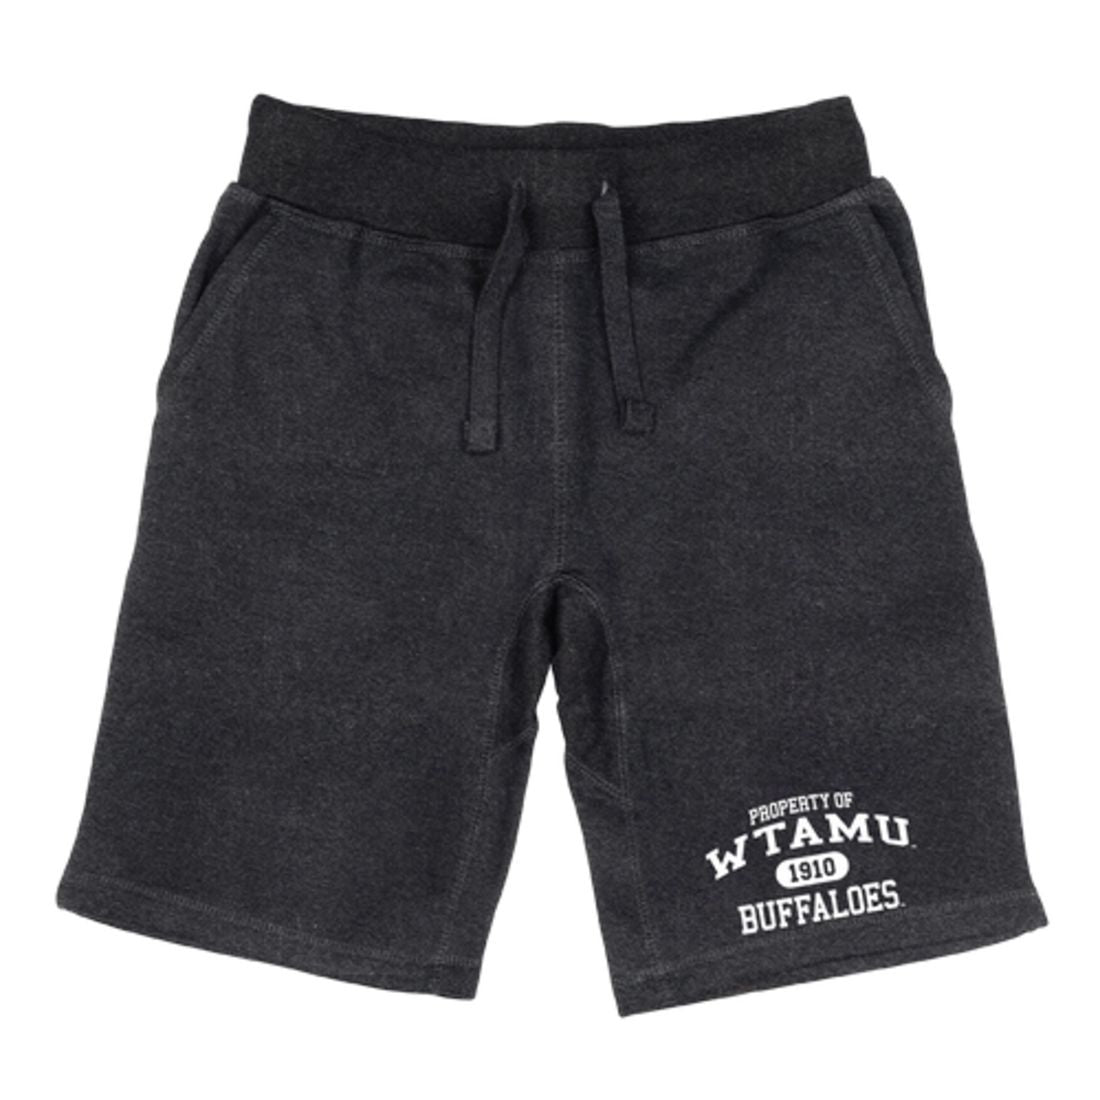 WTAMU West Texas A&M University Buffaloes Property Fleece Drawstring Shorts-Campus-Wardrobe